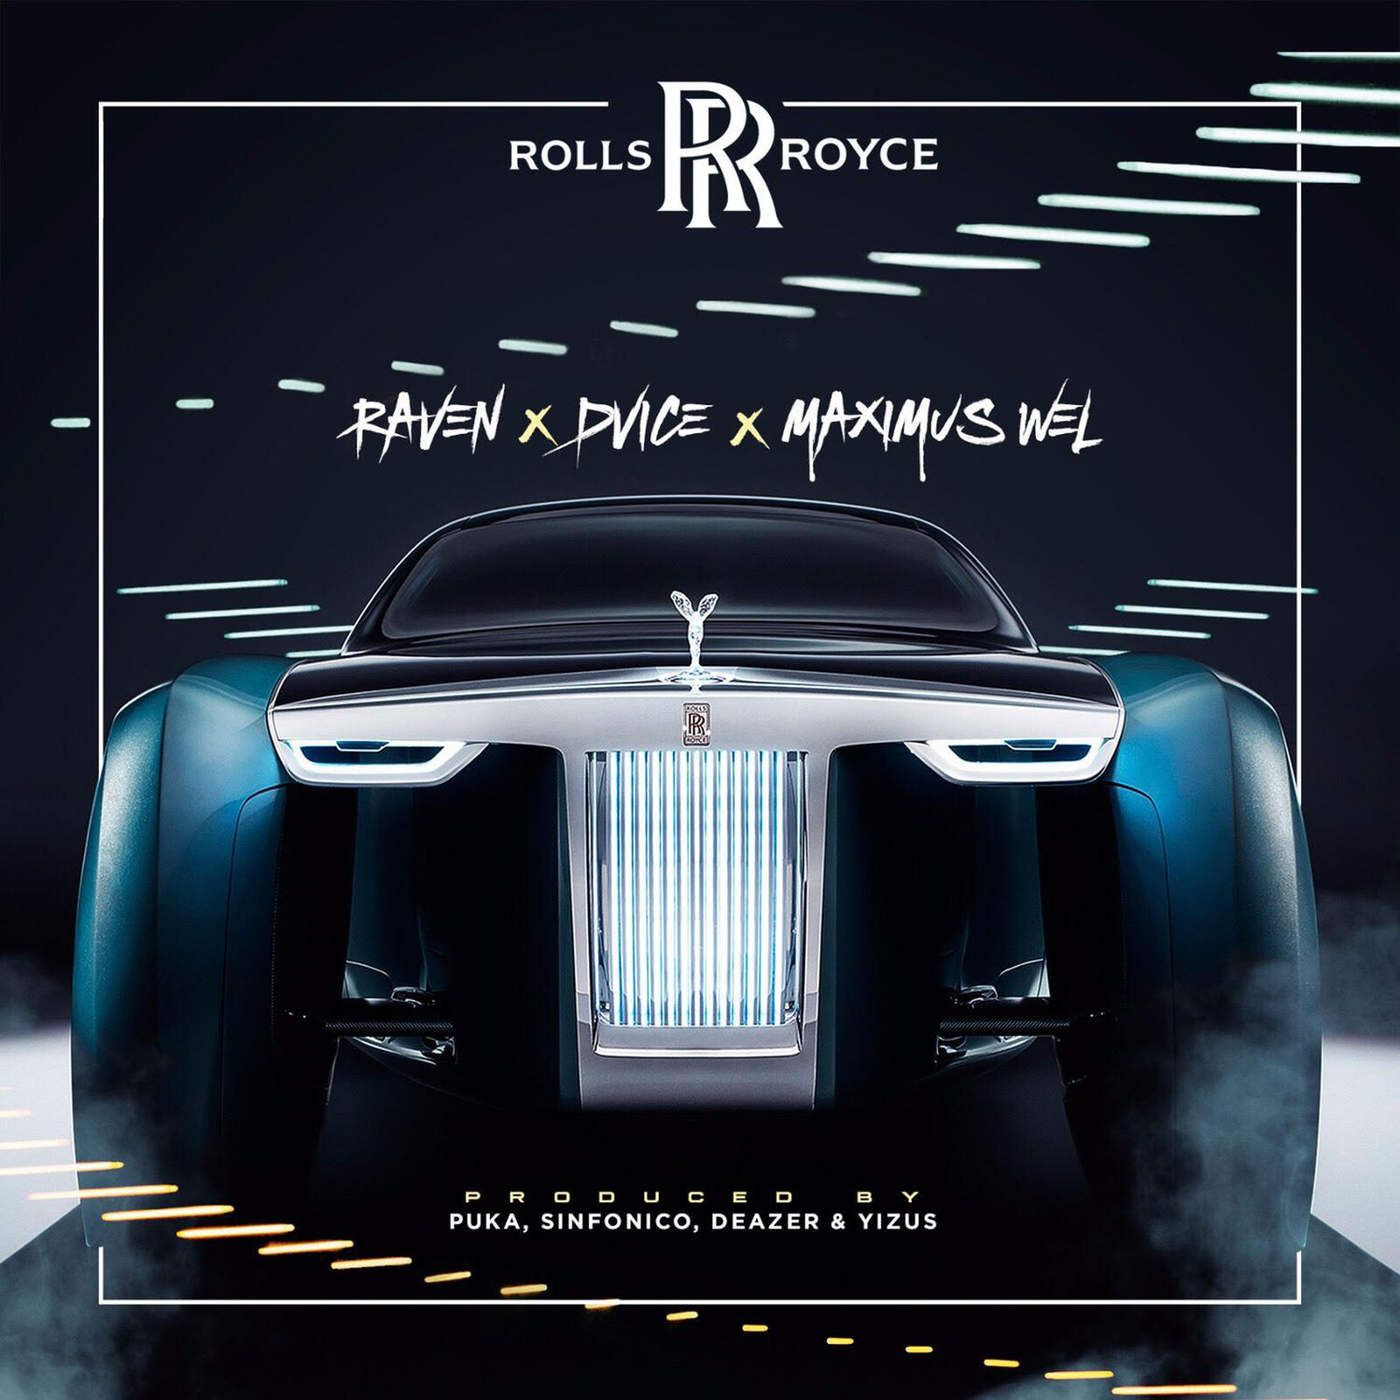 Rolls трек. Роллс Ройс обложка. Обложки с Роллс Ройсом для трека. Обложки треков с машинами. Rolls Royce на обложка.